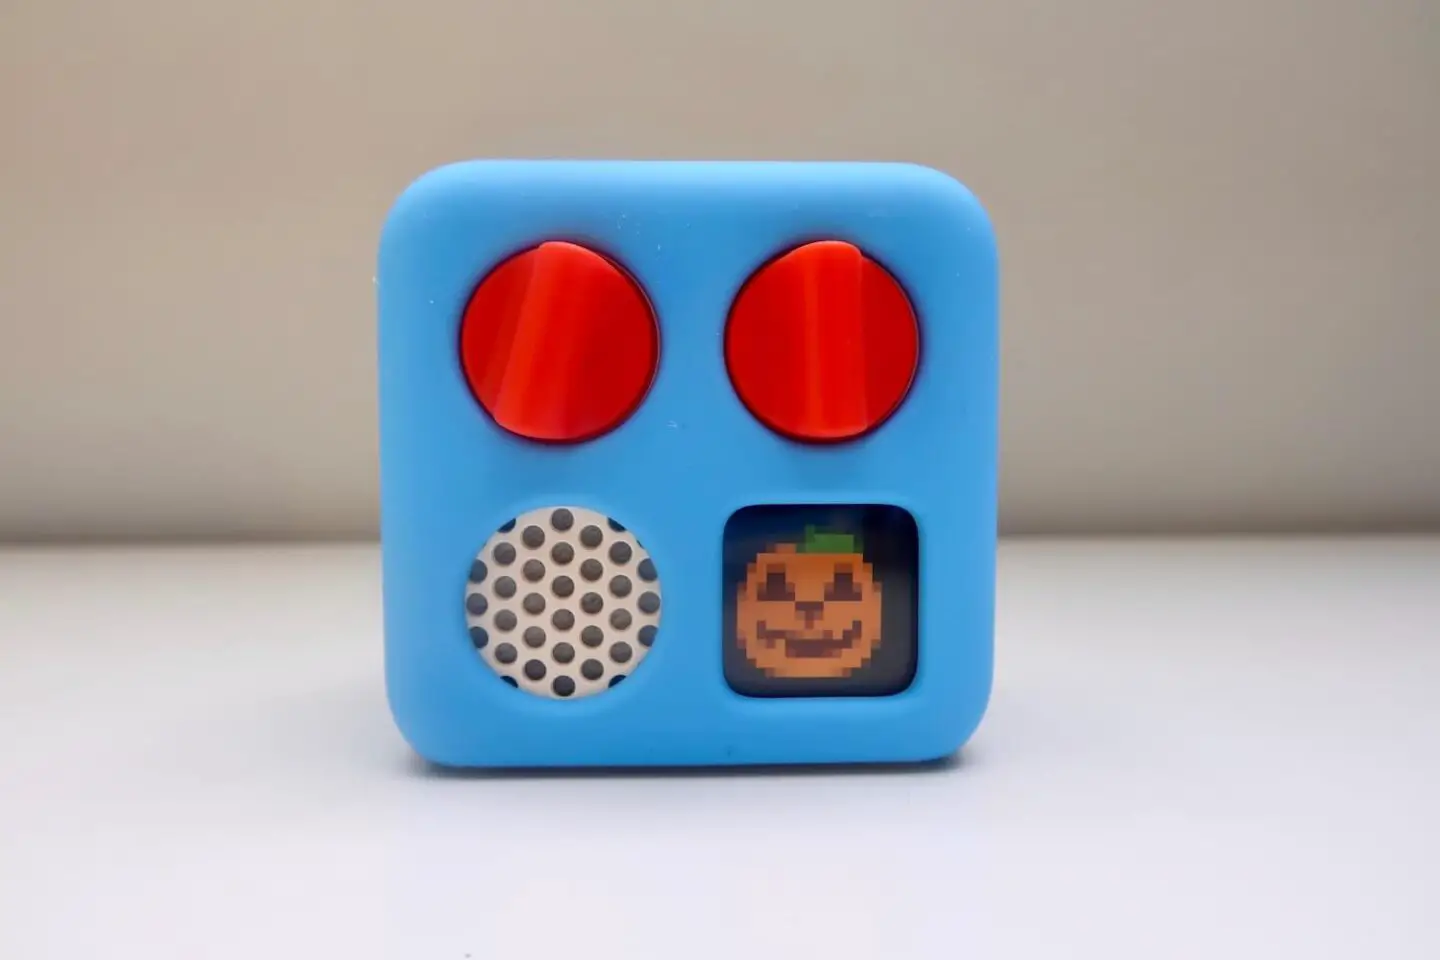 A Yoto mini wearing a blue adventure jacket. The mini screen is showing a pumpkin